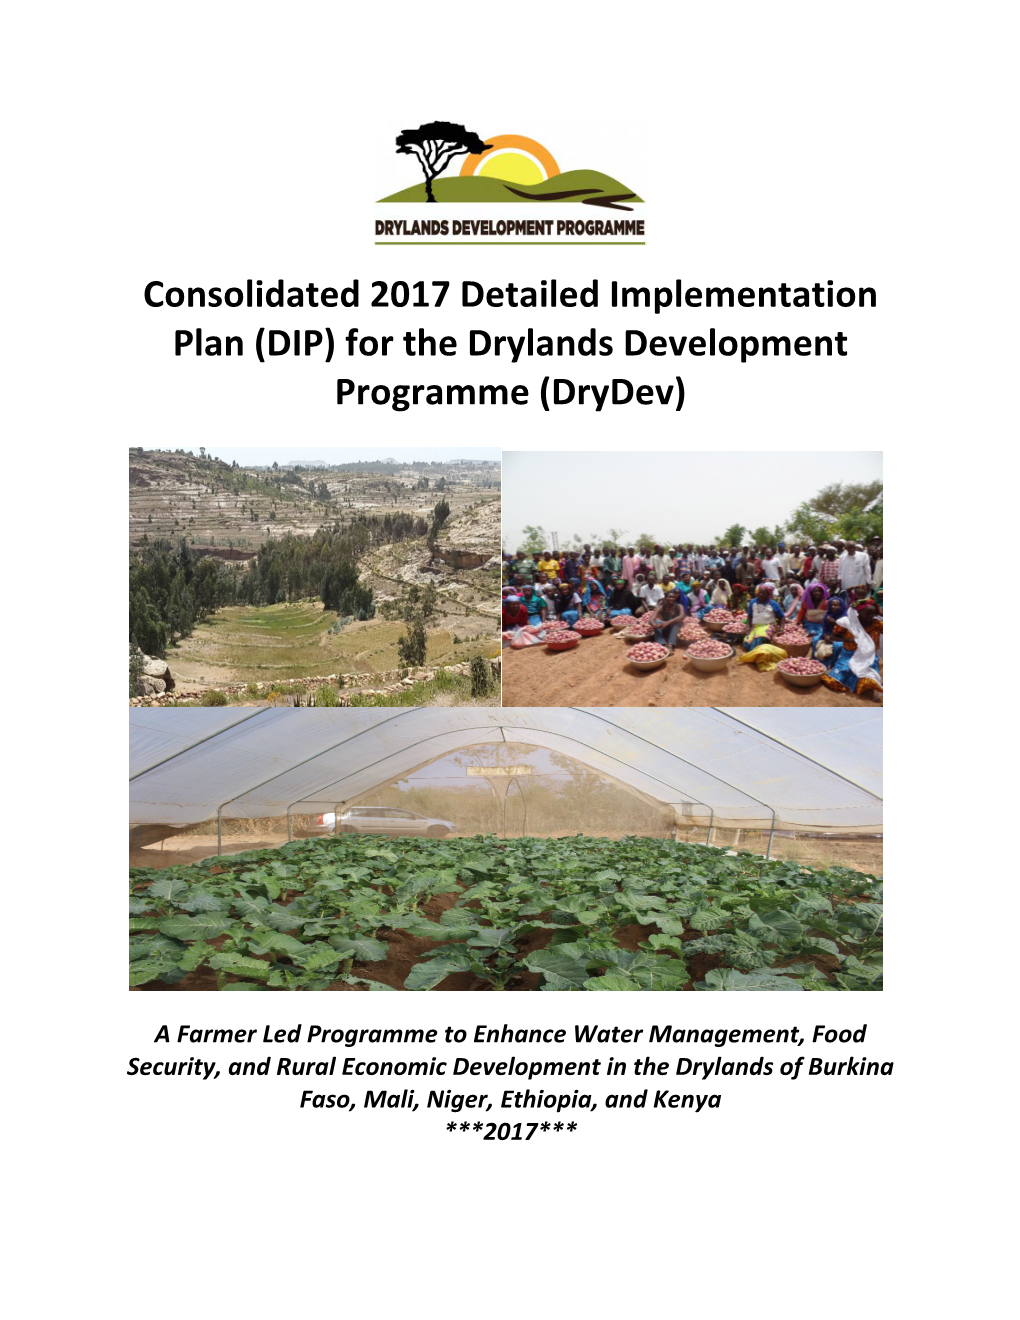 Consolidated 2017 Detailed Implementation Plan (DIP) for the Drylands Development Programme (Drydev)